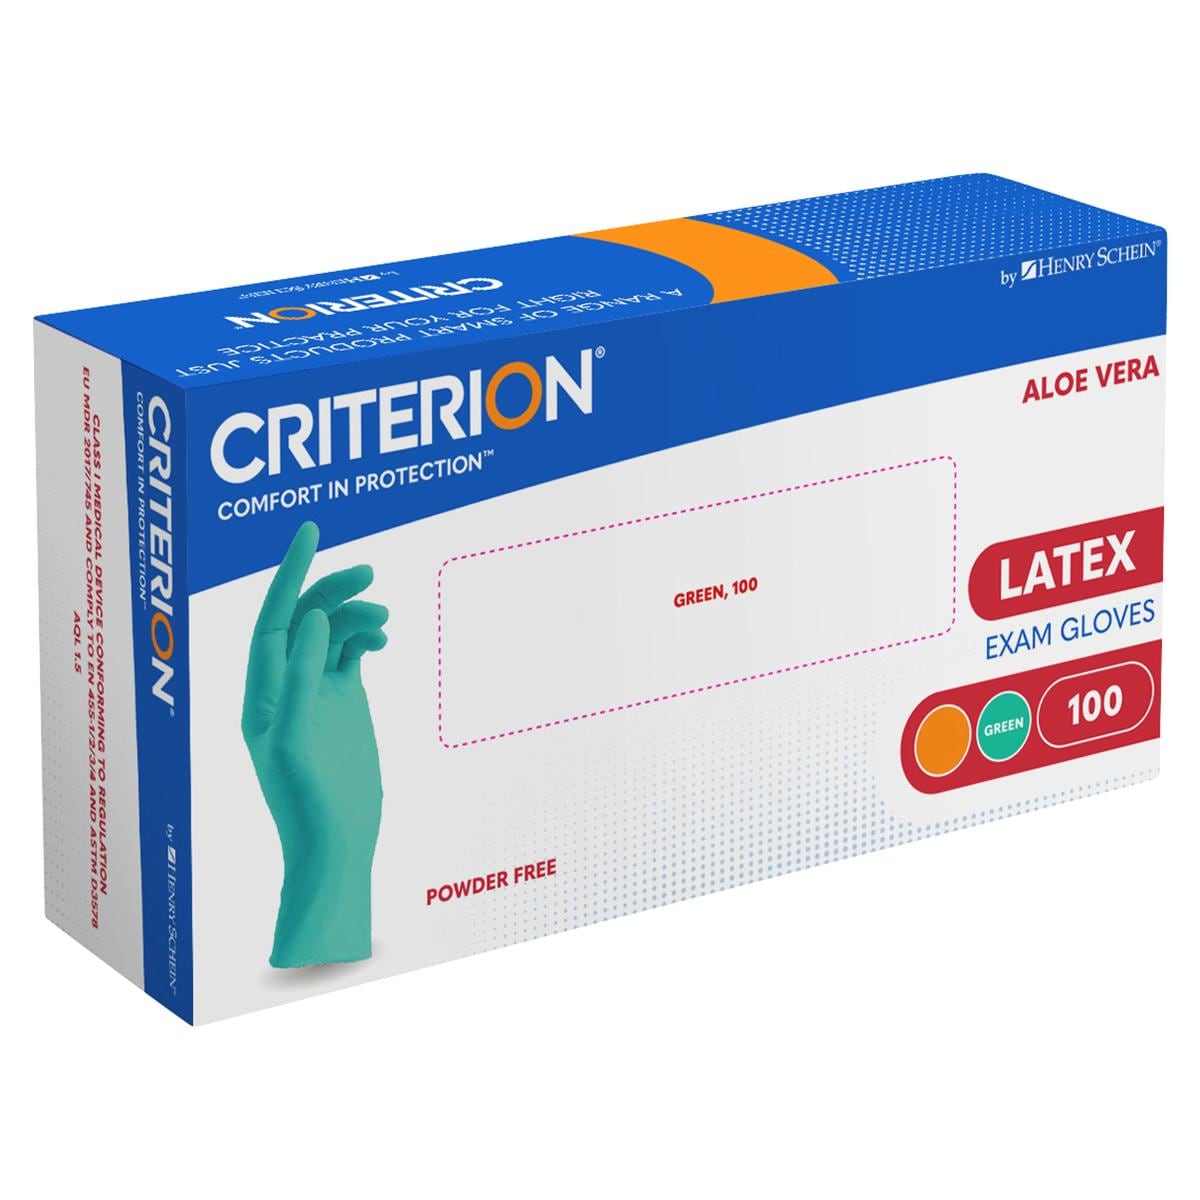 HS-Aloe Latex Handschuhe puderfrei Criterion® - Größe S, Packung 100 Stück